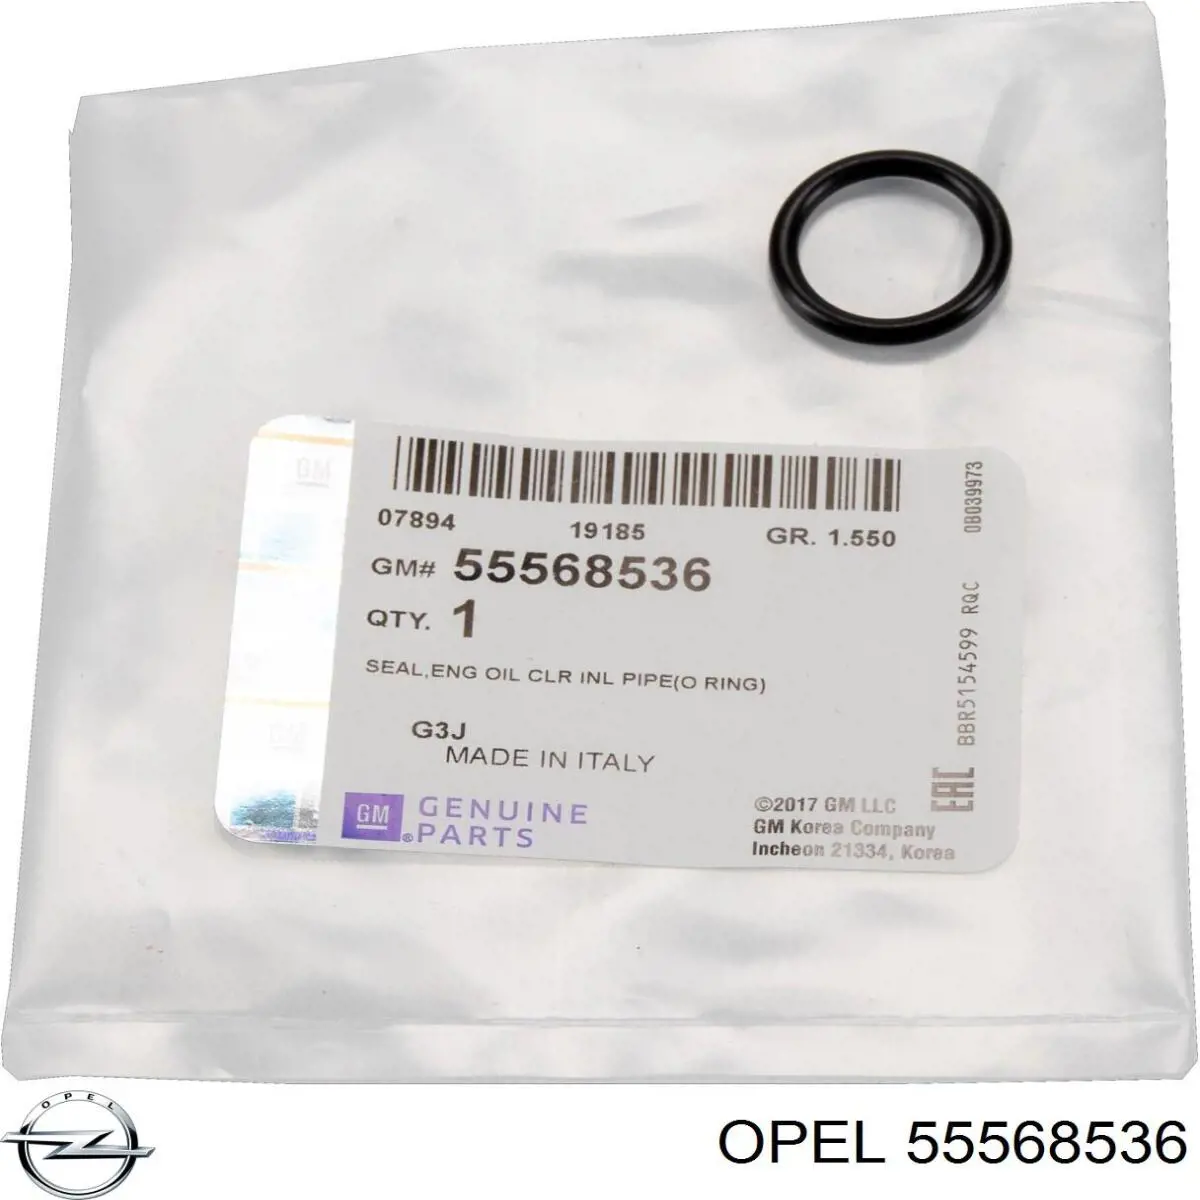 55568536 Opel vedante de adaptador do filtro de óleo